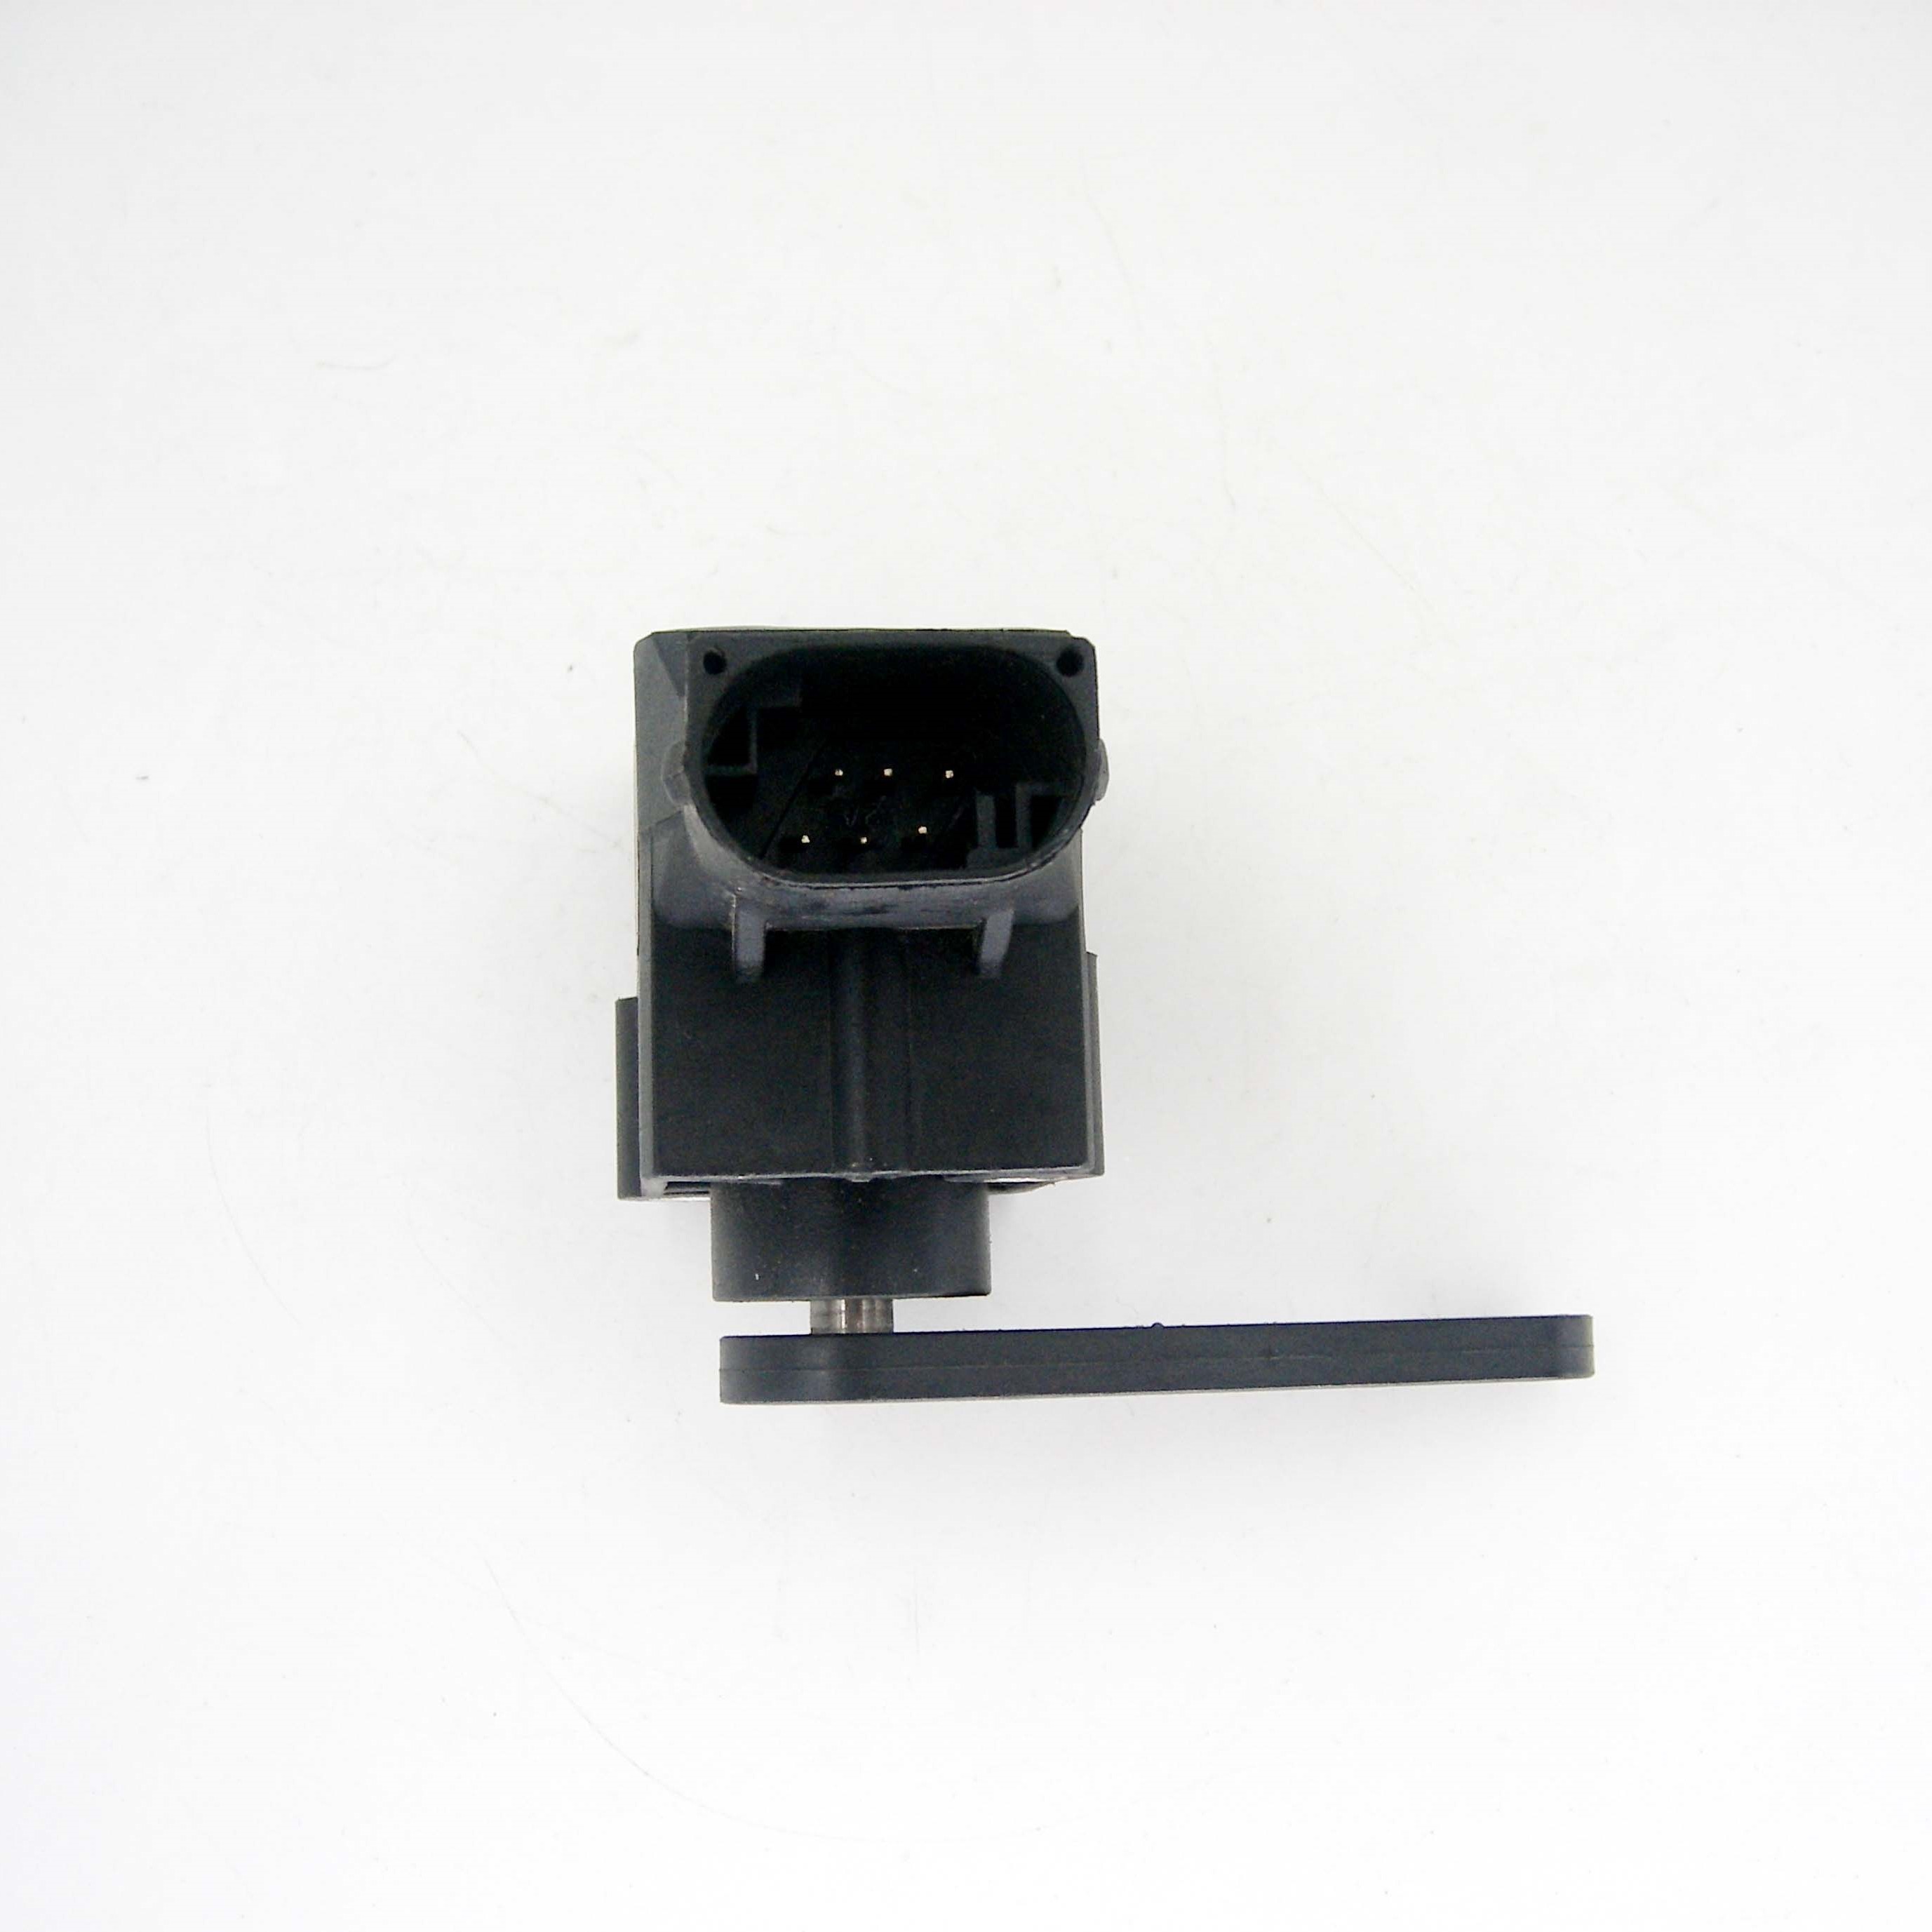 Headlight Level sensor Suspension height sensor for Bmw 37141093698 37146784697 37140141445 37141093700 37146778812